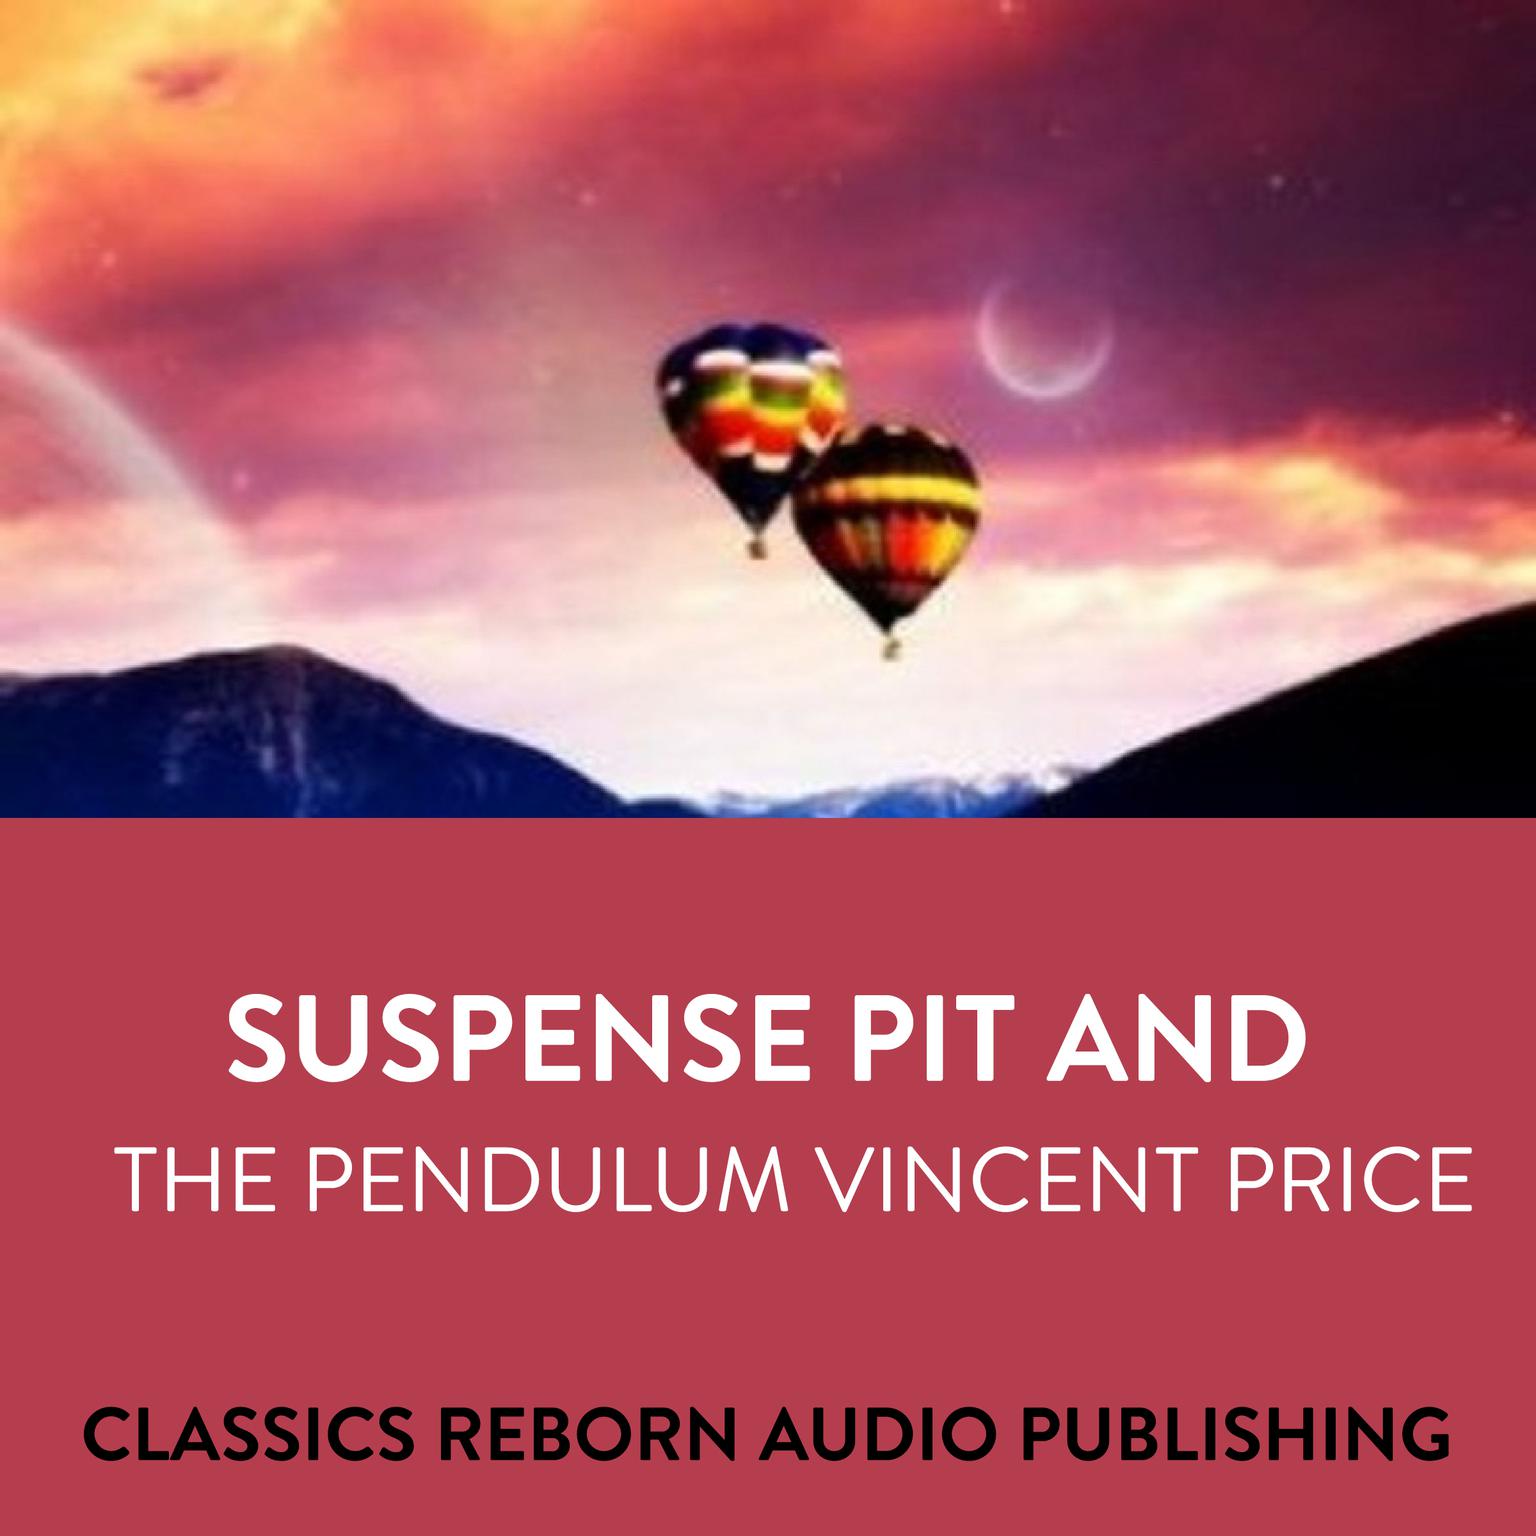 Suspense  Pit And The Pendulum  Vincent Price Audiobook, by Classics Reborn Audio Publishing